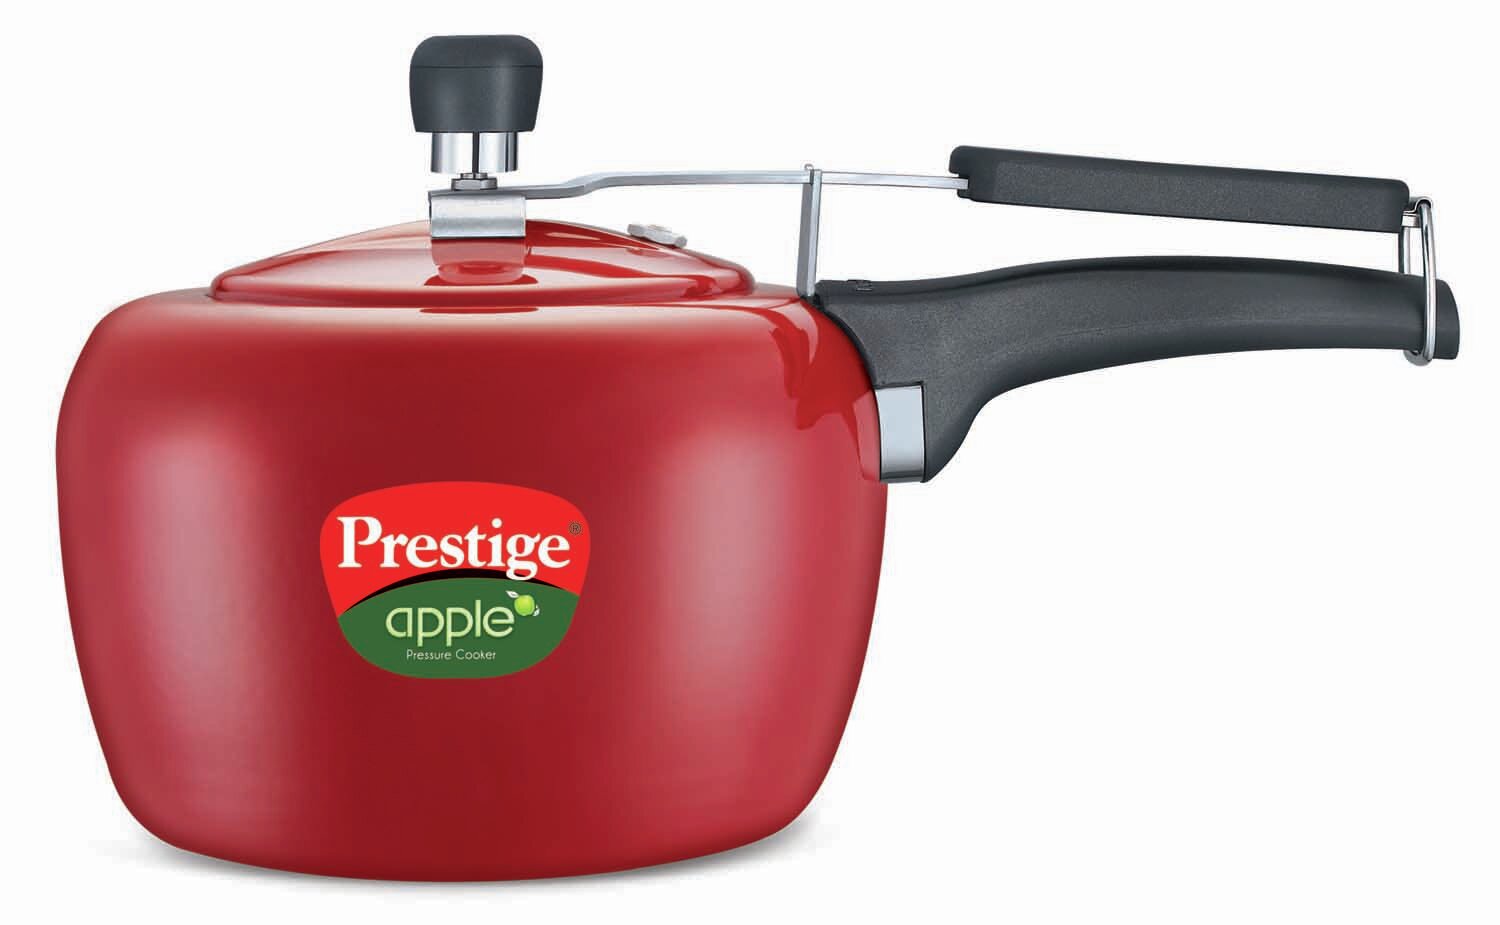 Bene Casa Electric Pressure Cooker, Red, 5 LT | Small Appliance | CVS